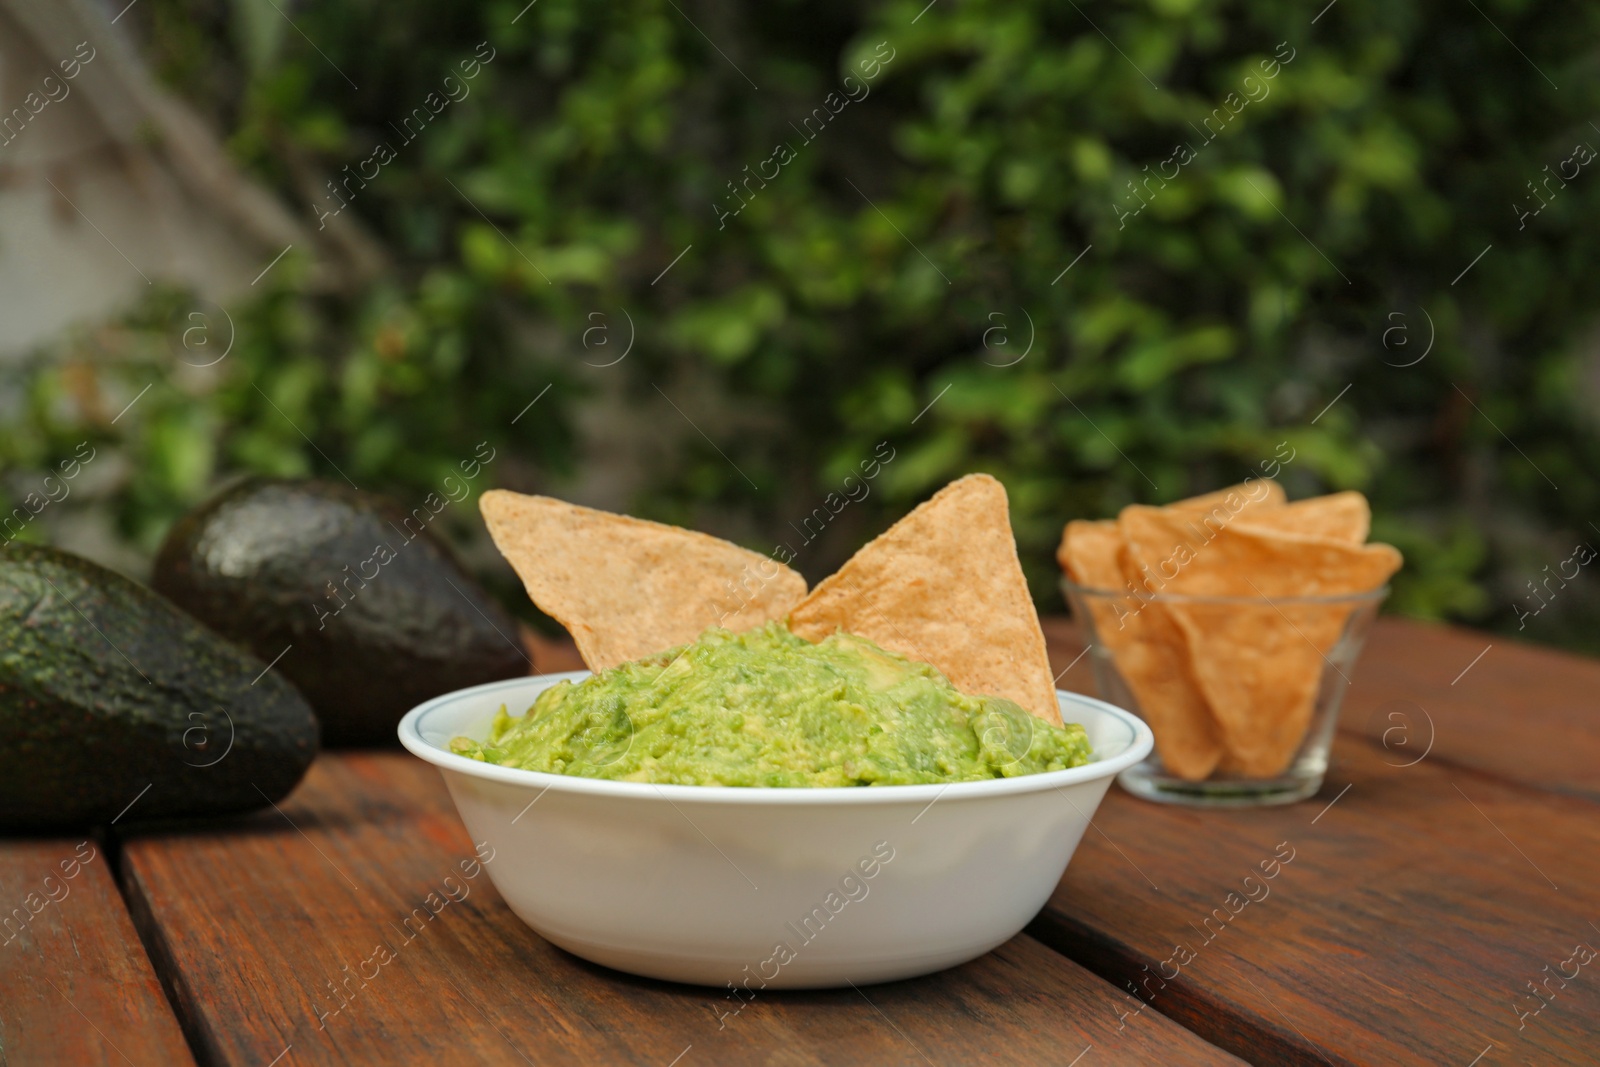 Photo of Delicious guacamole, avocado and nachos on wooden table outdoors